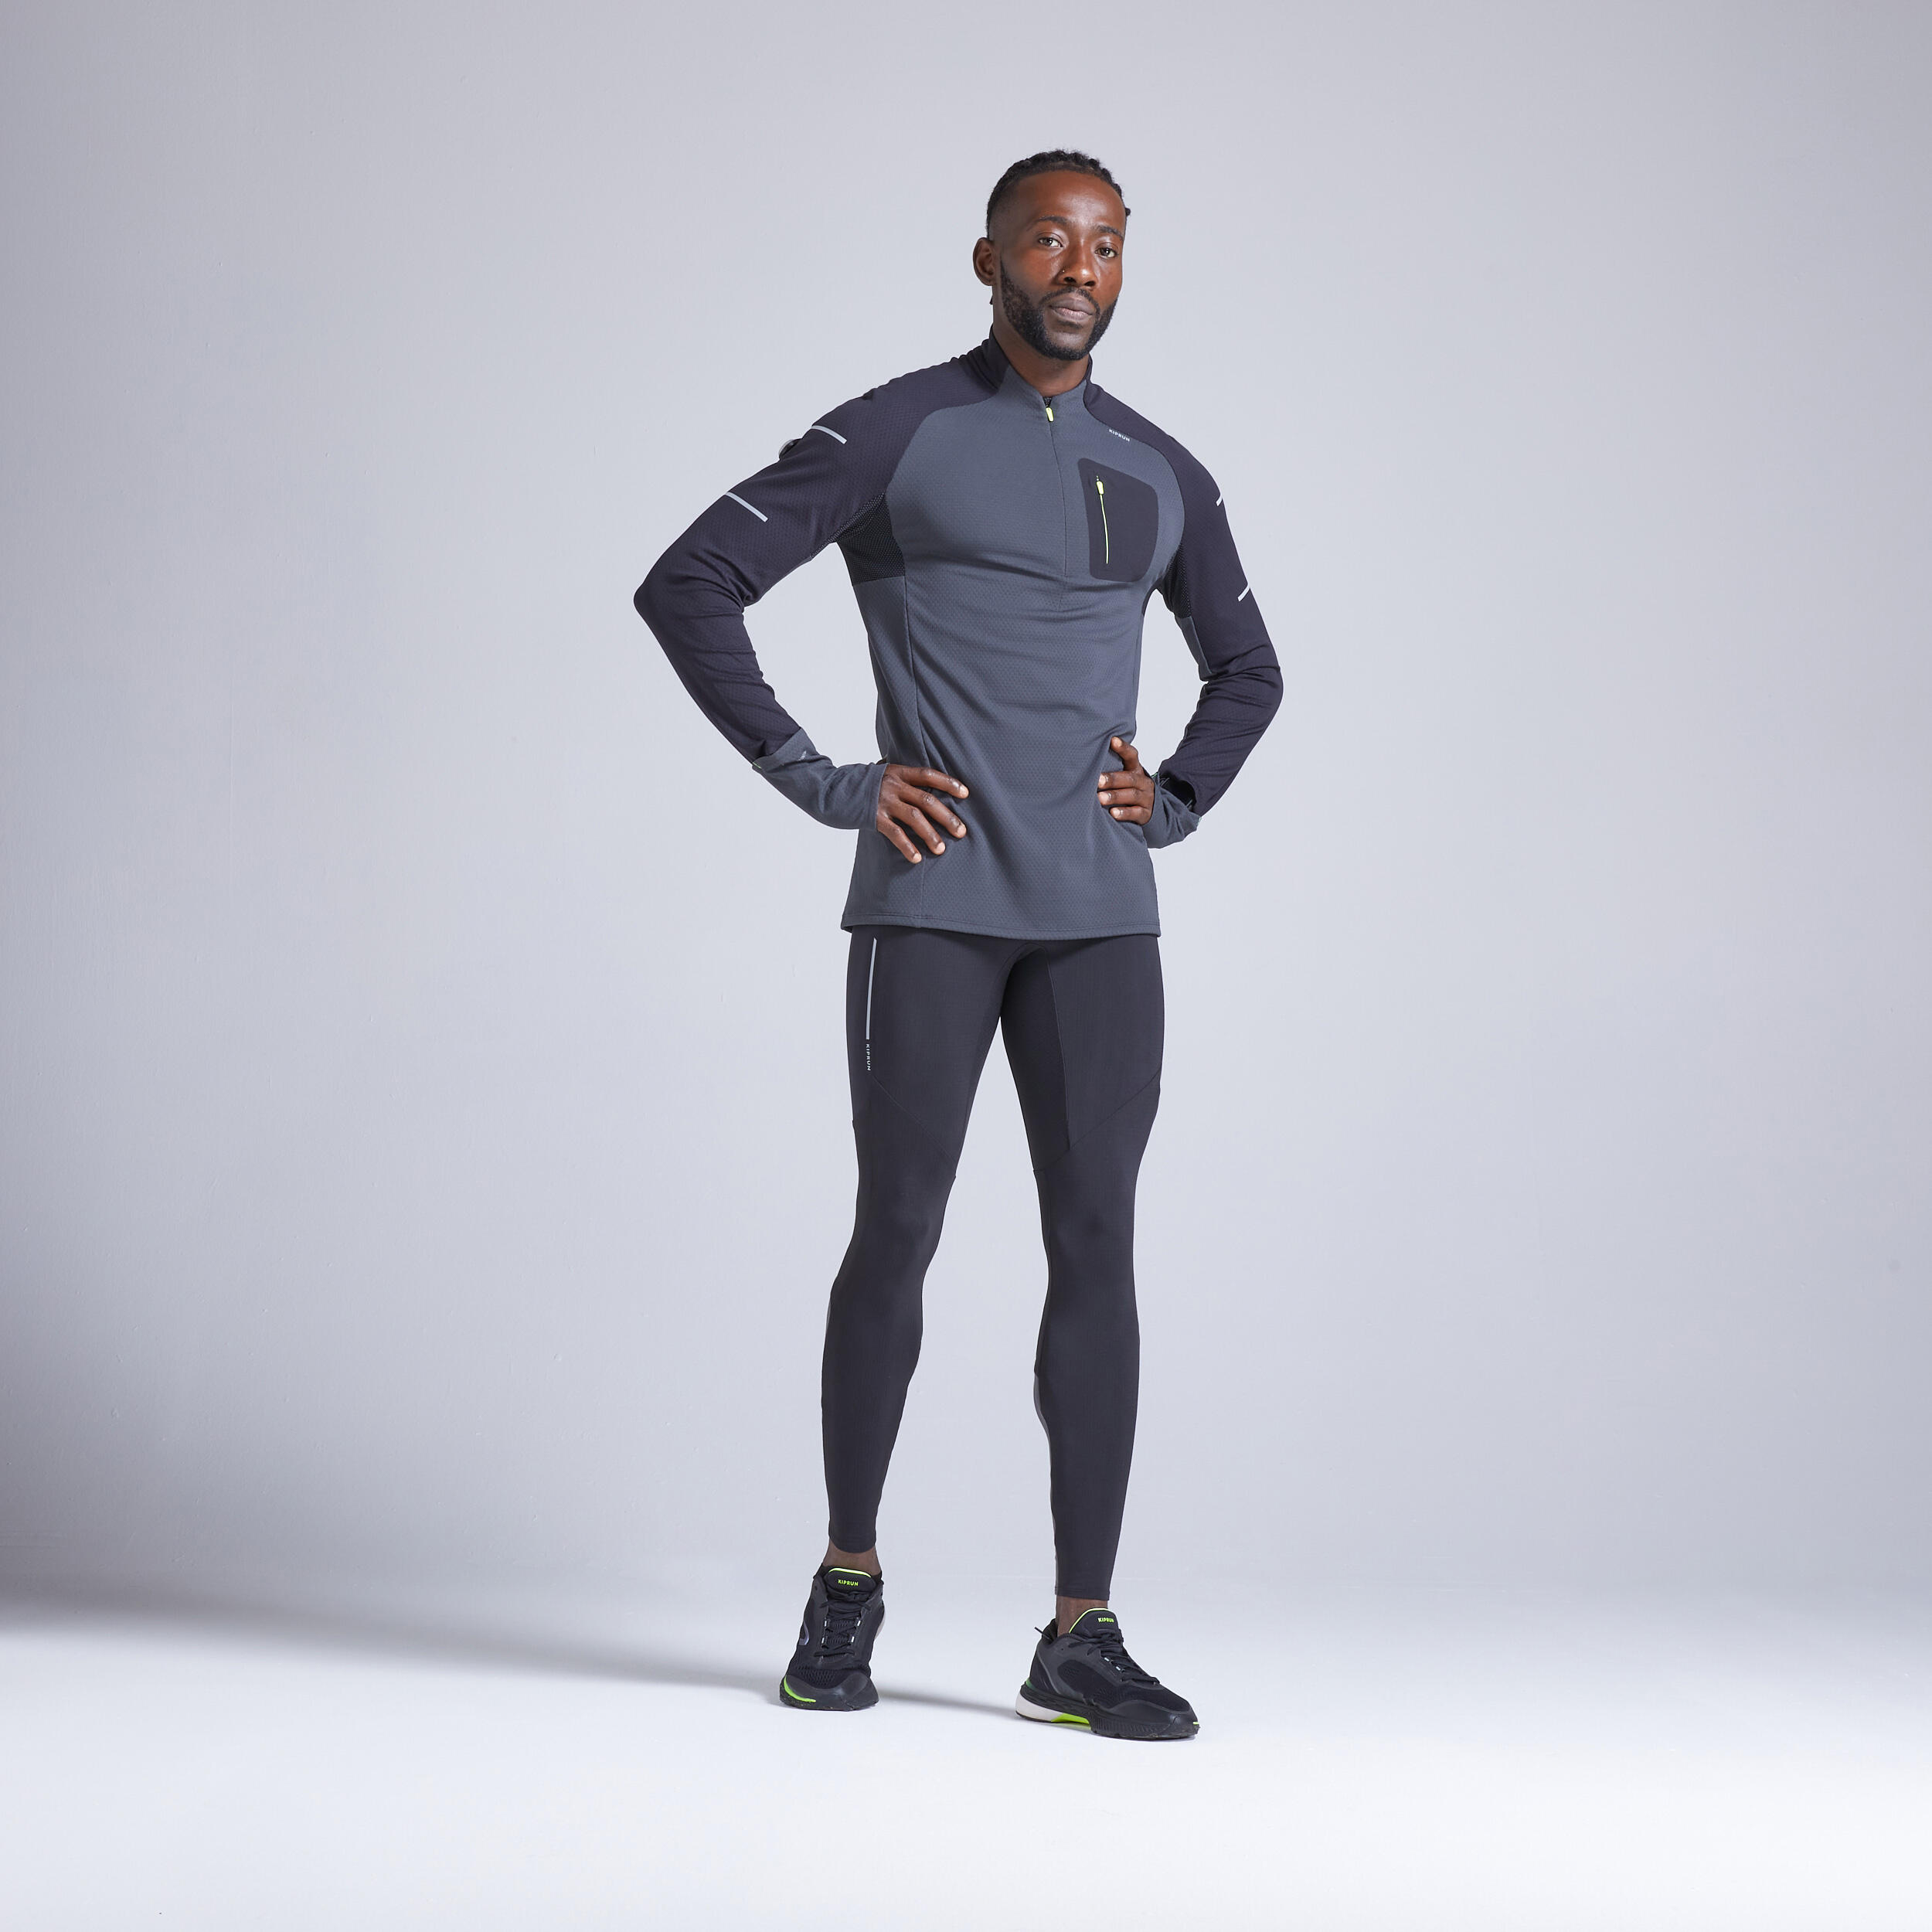 Men's Running Leggings - Warm Black/Grey